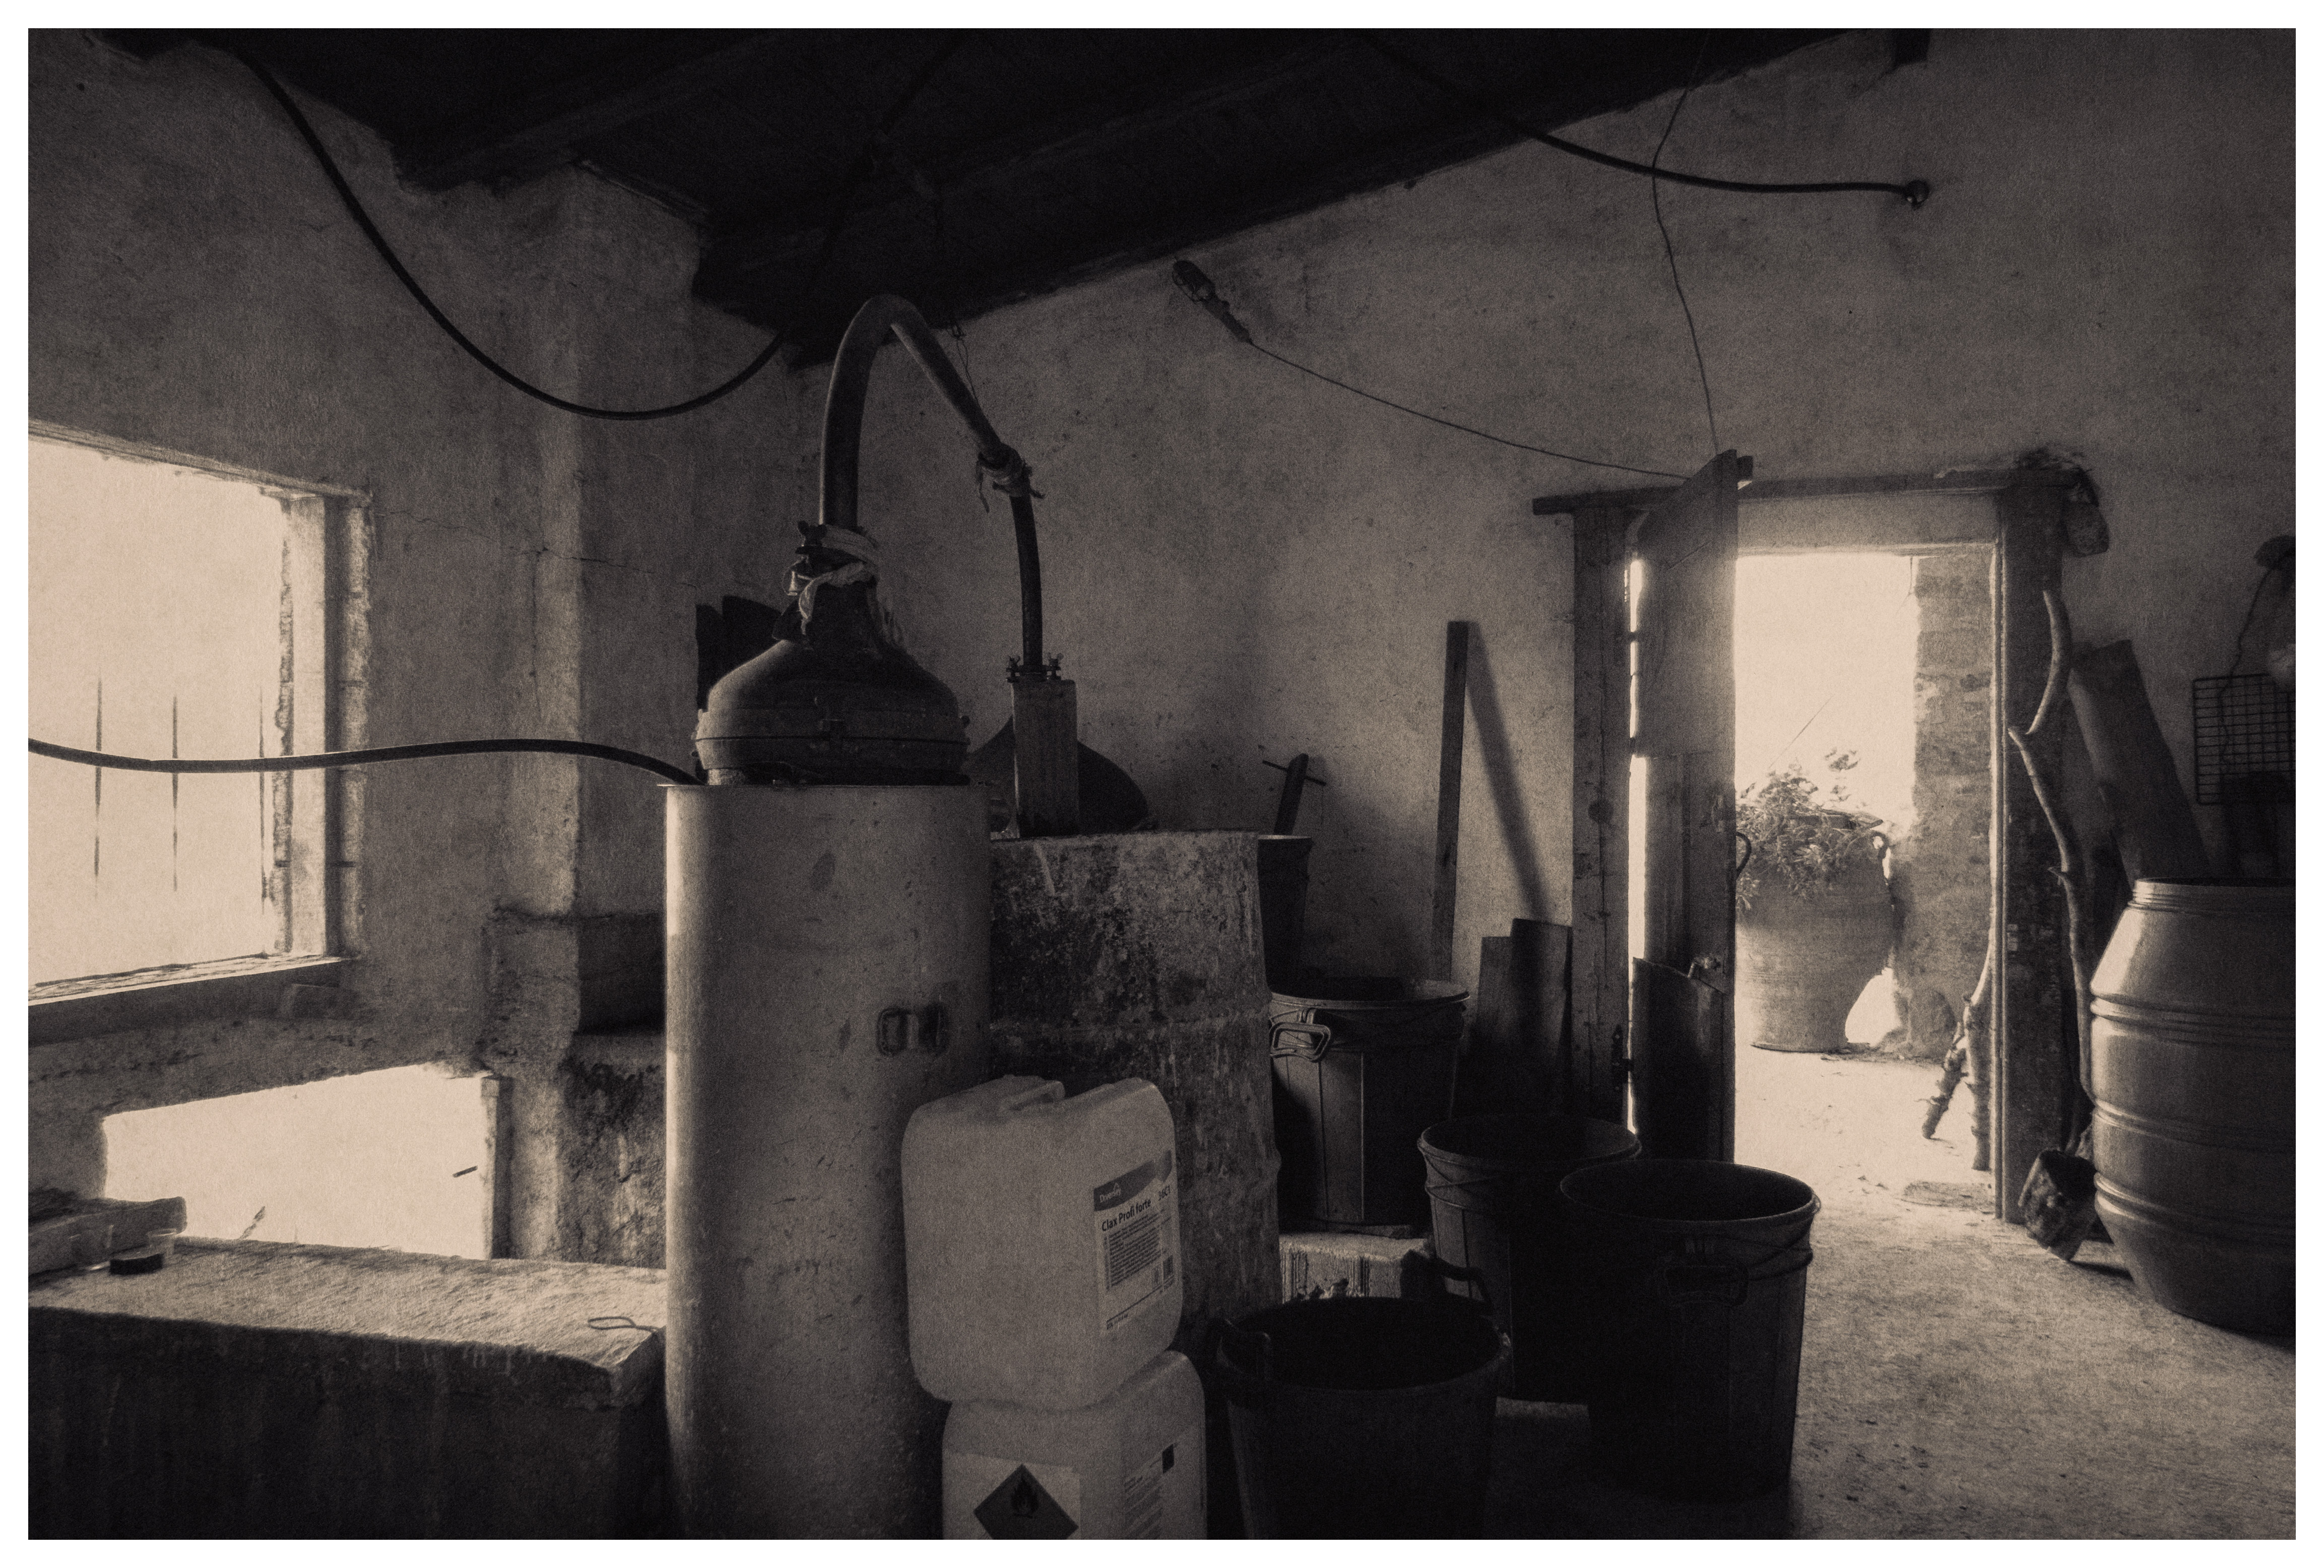 Wallpaper, vintage, old, film, grain, street, indoors, industry, Crete, Greece, monochrome, blackandwhite, bnw, bw 4612x3112